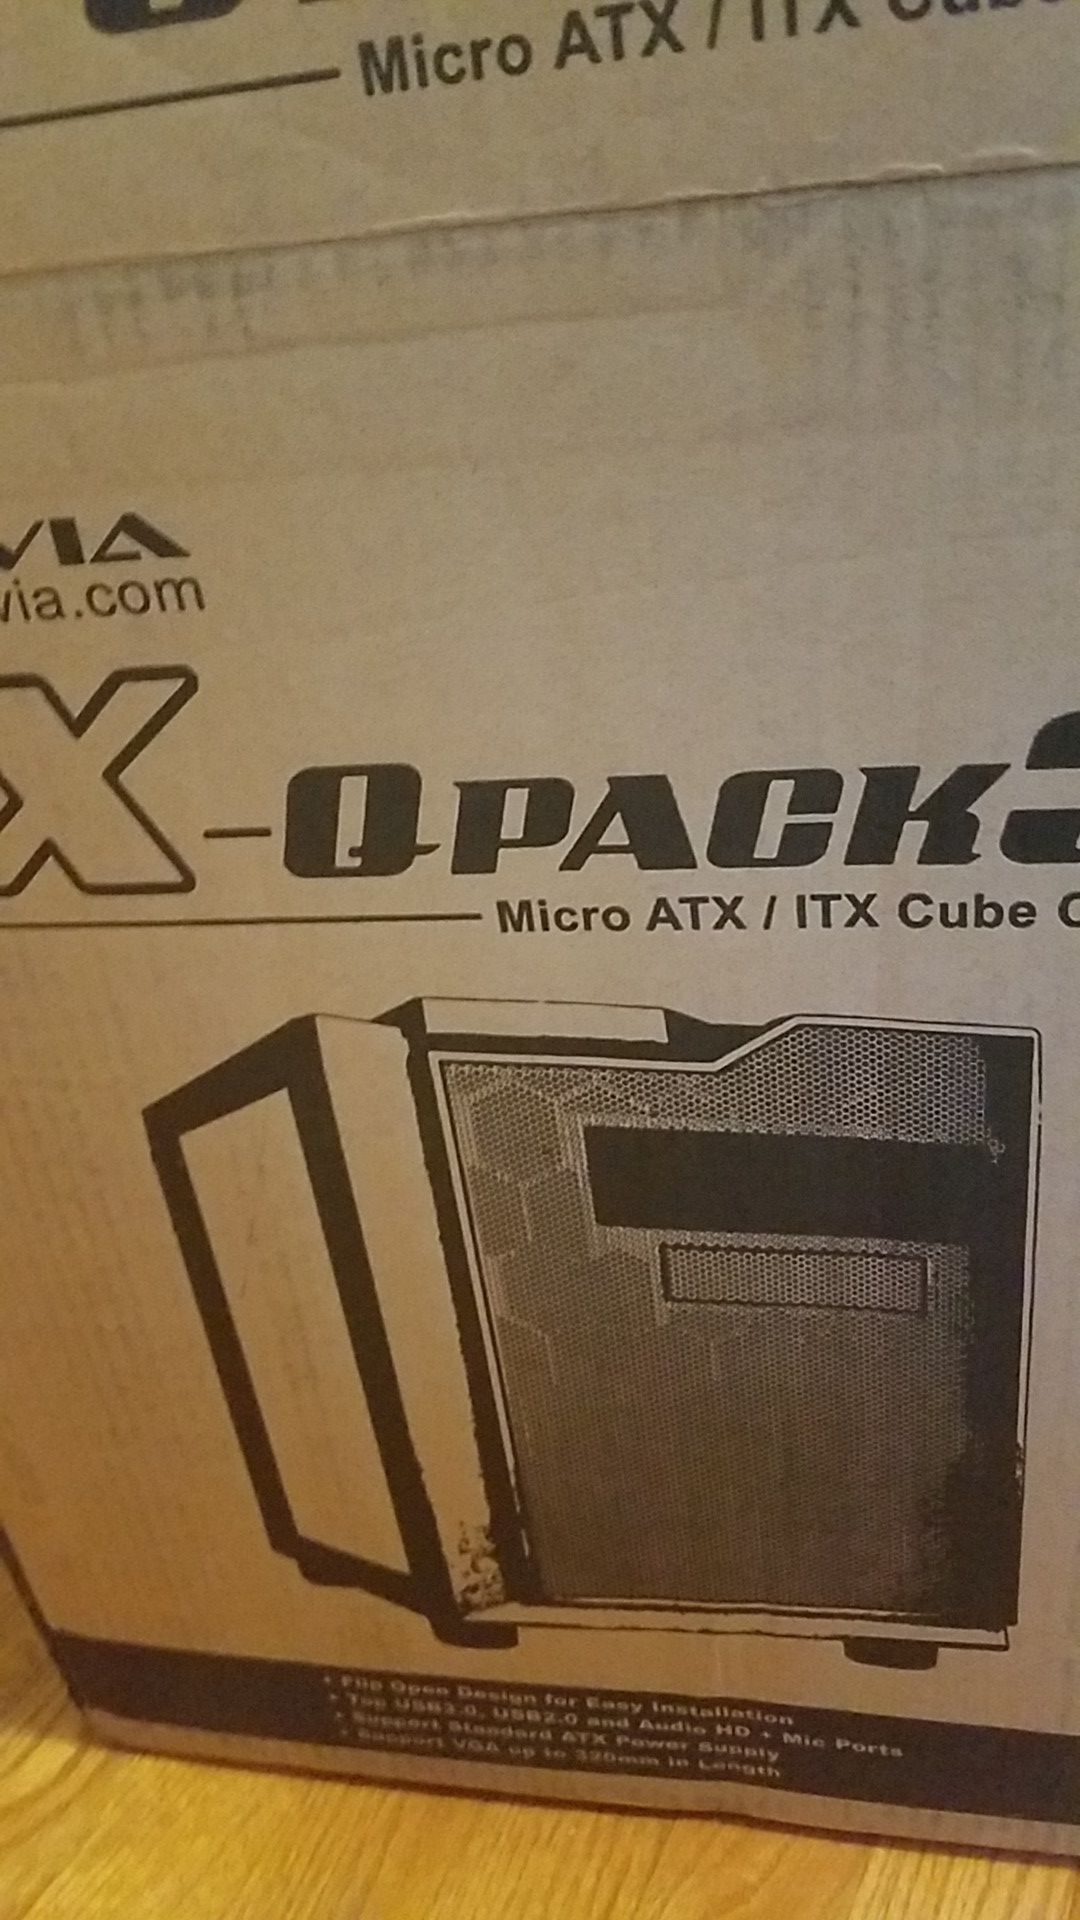 Apevia X-Qpack3 black cube case